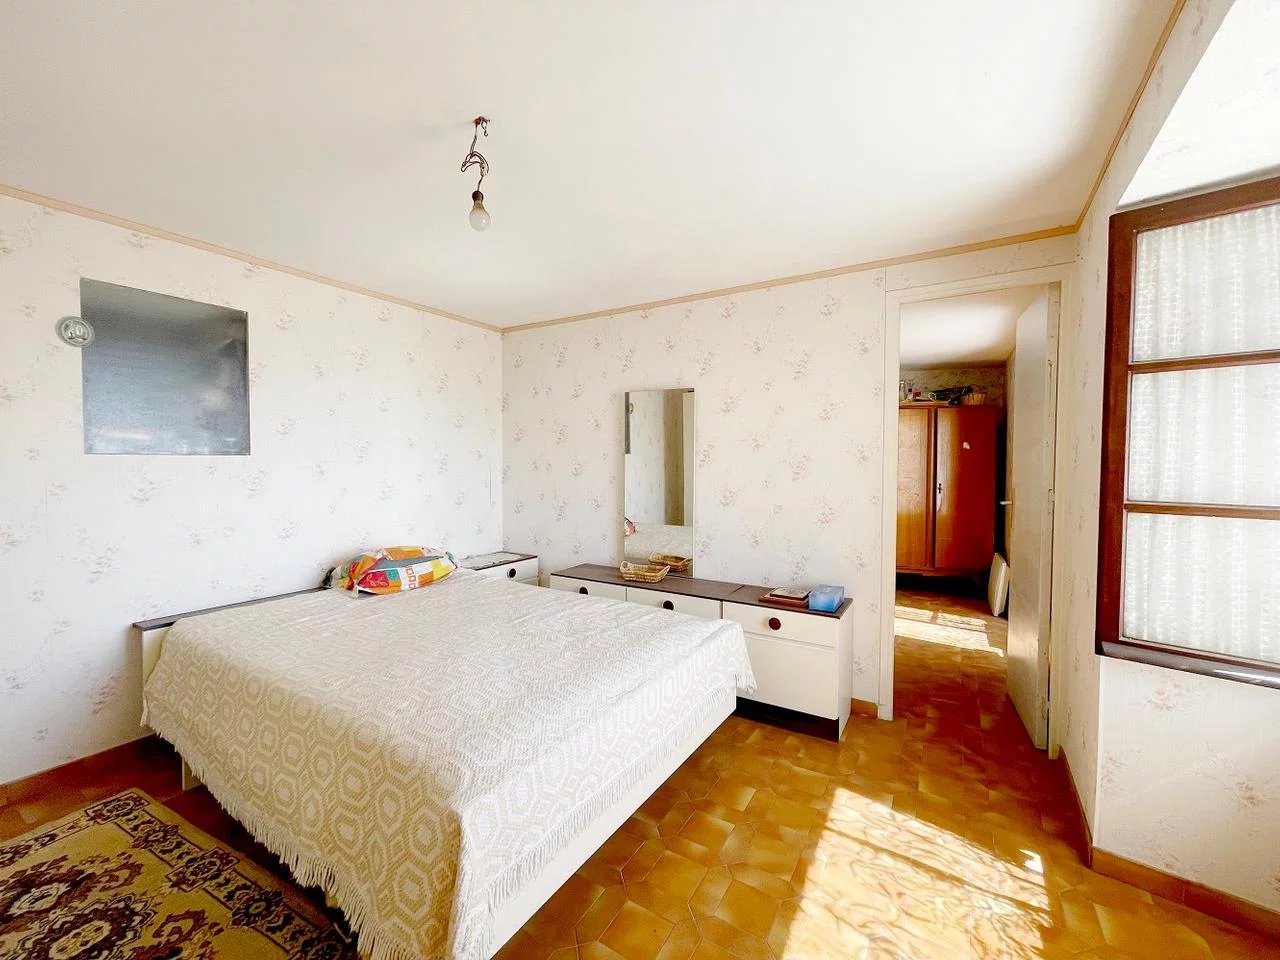 Appartement  3 Locali 49m2  In vendita    80 000 €